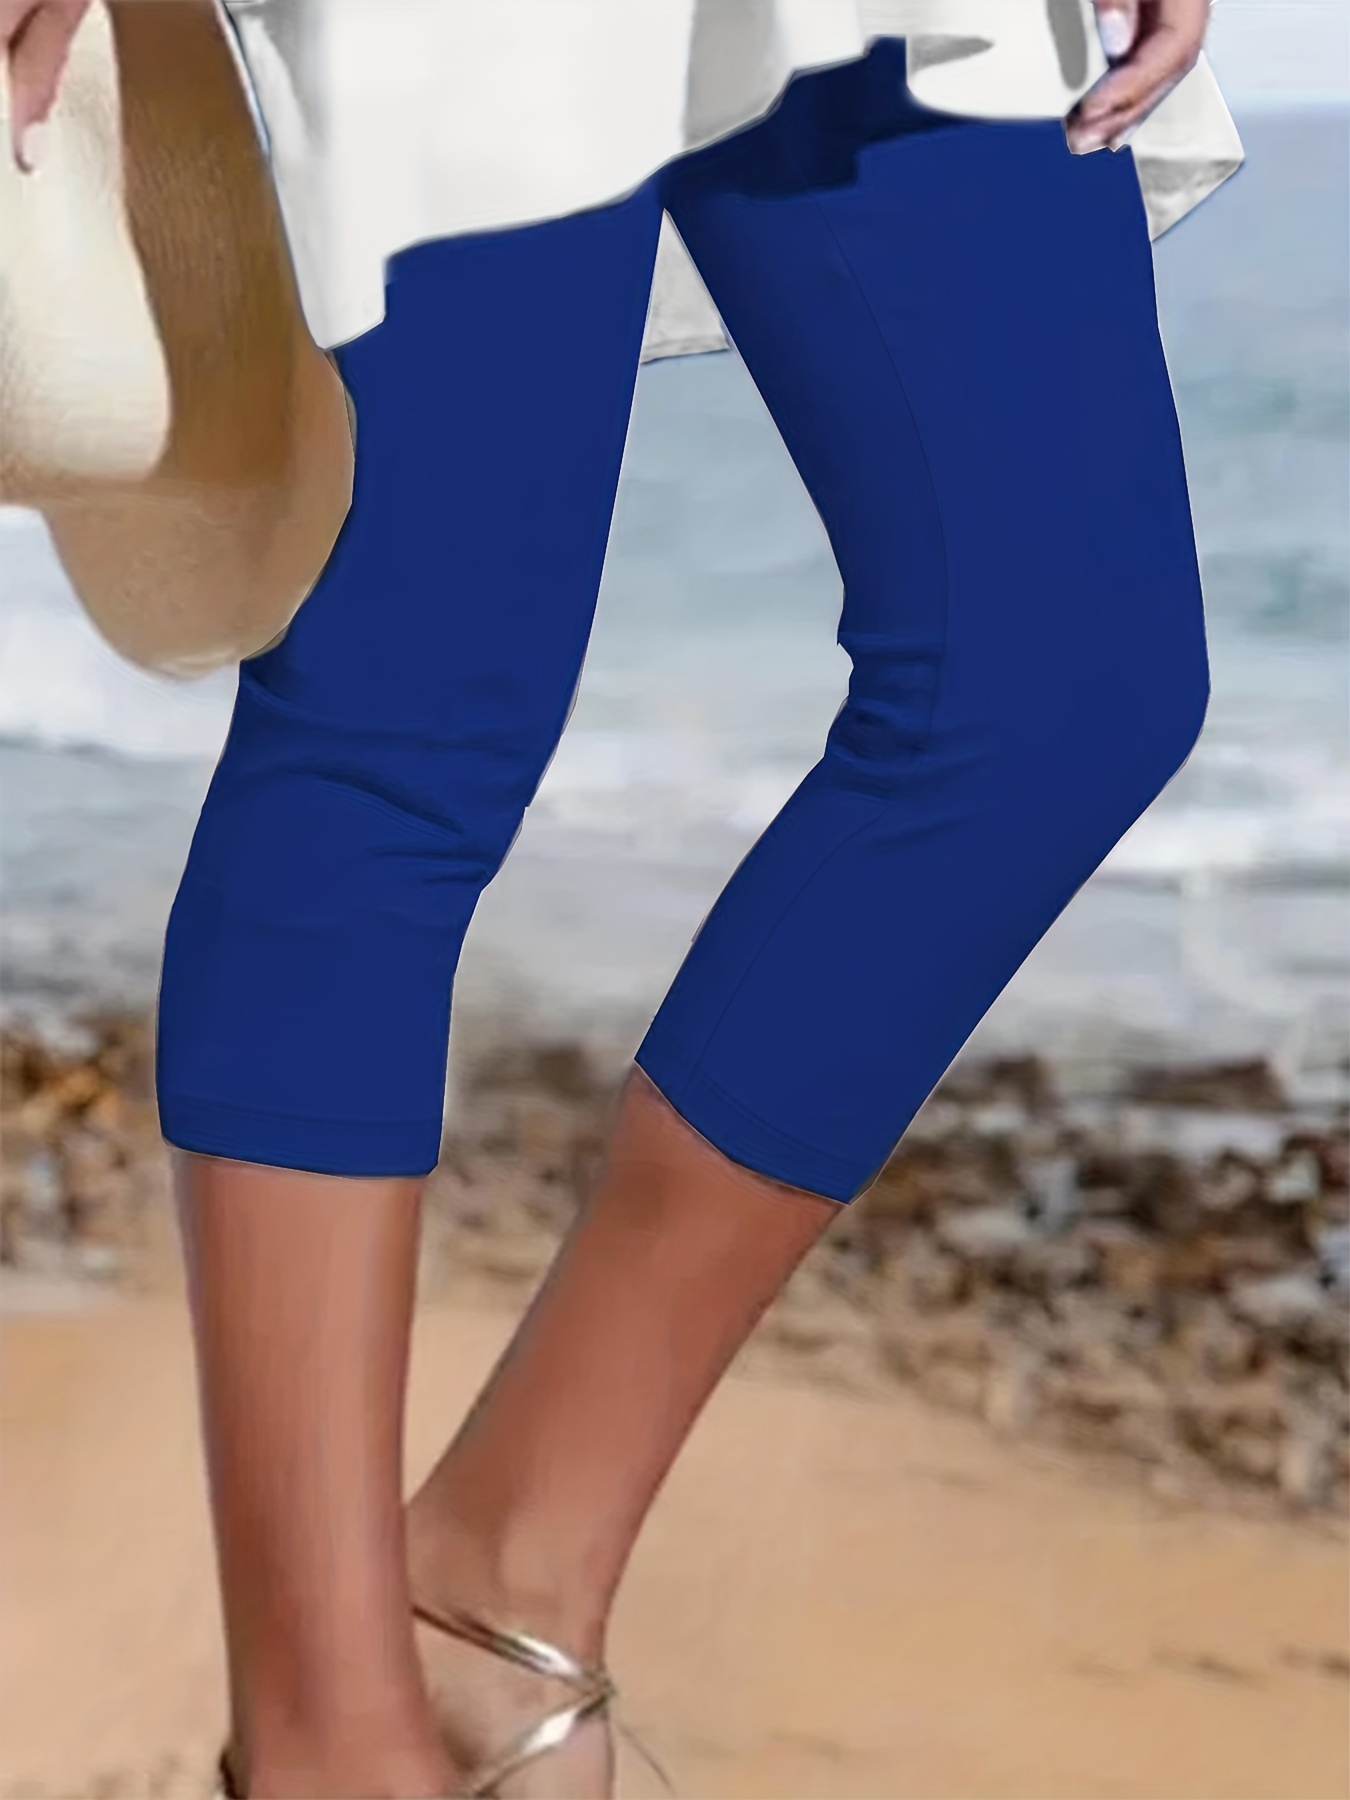 bluensquare Women's Plus Size Capri Leggings Premium Soft and Stretche